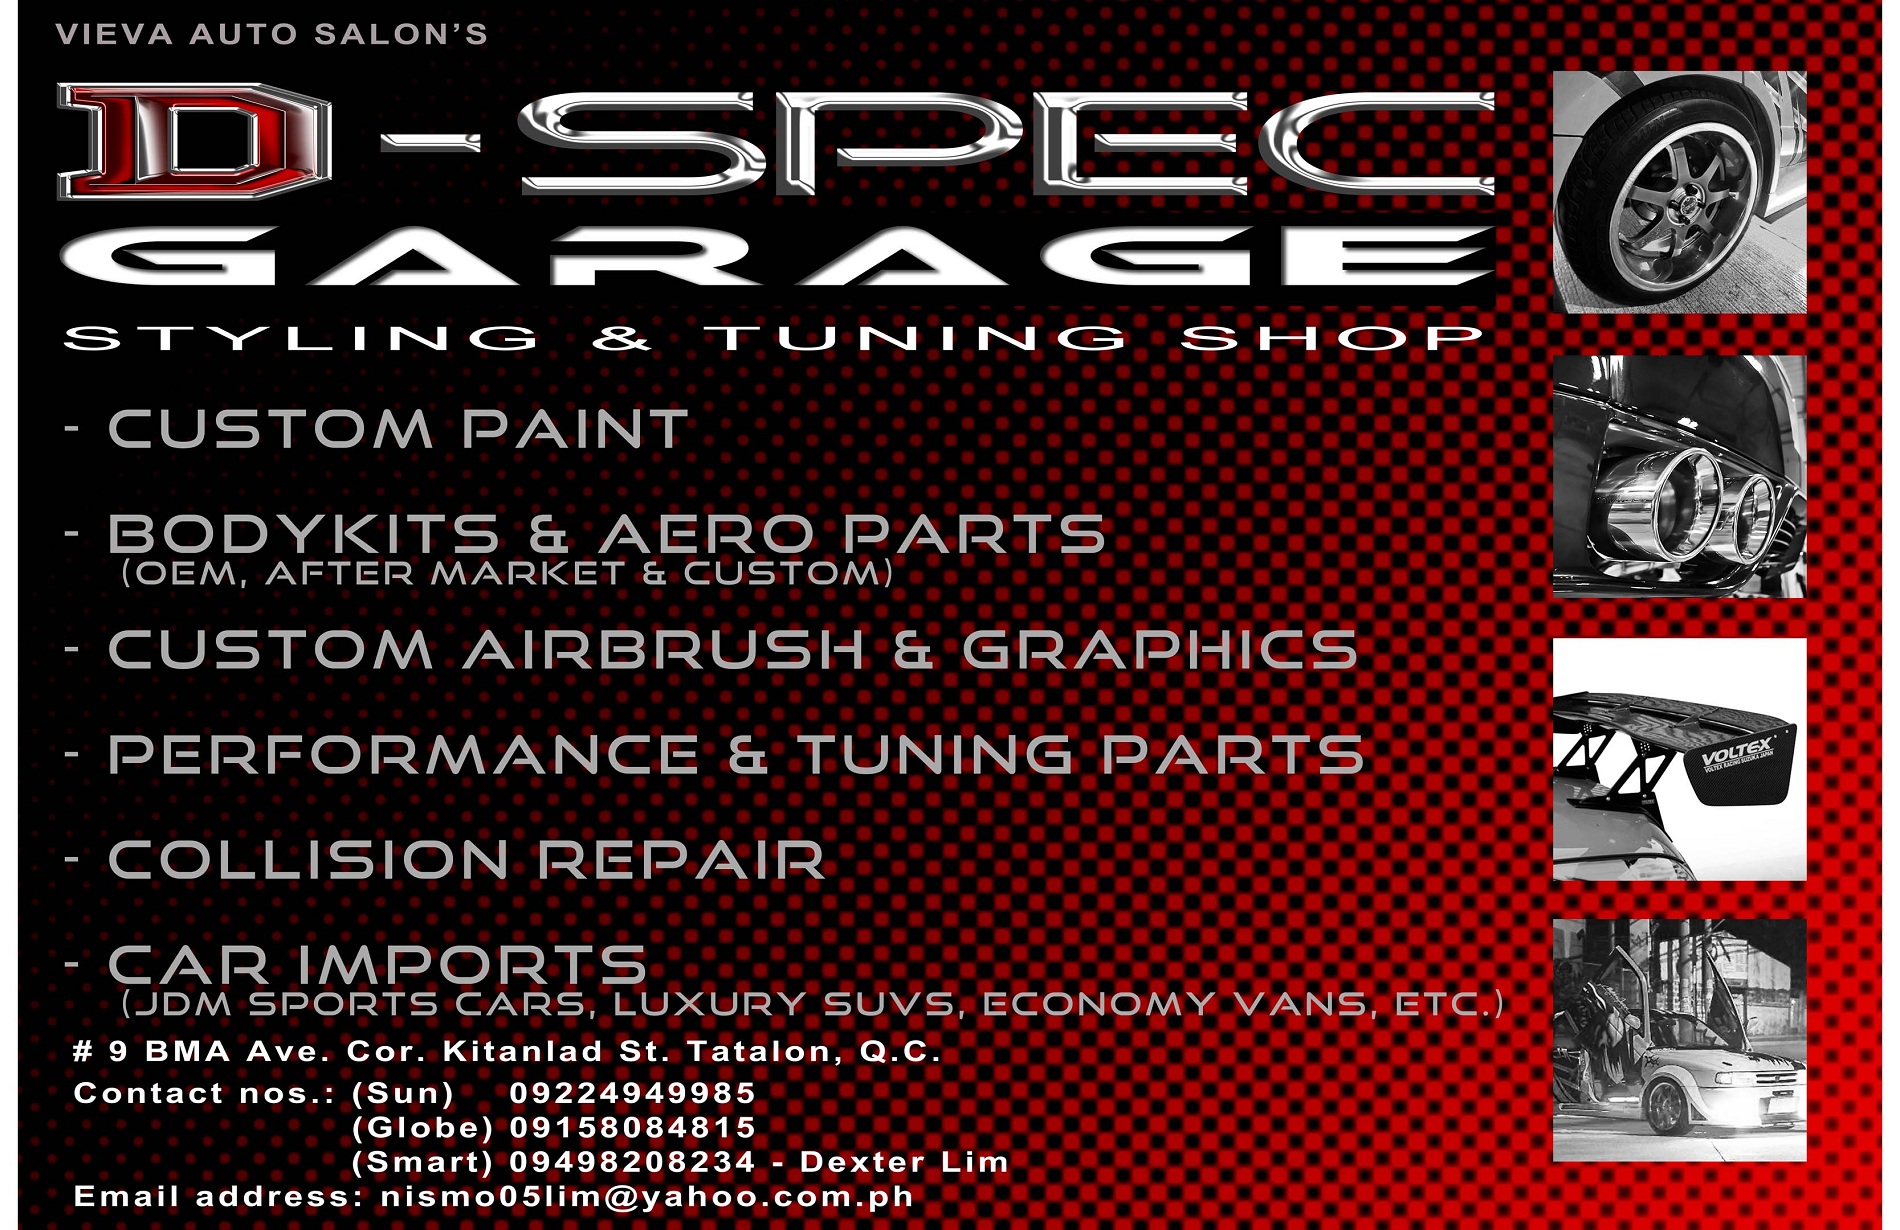 D-Spec Garage Styling & Tuning Shop